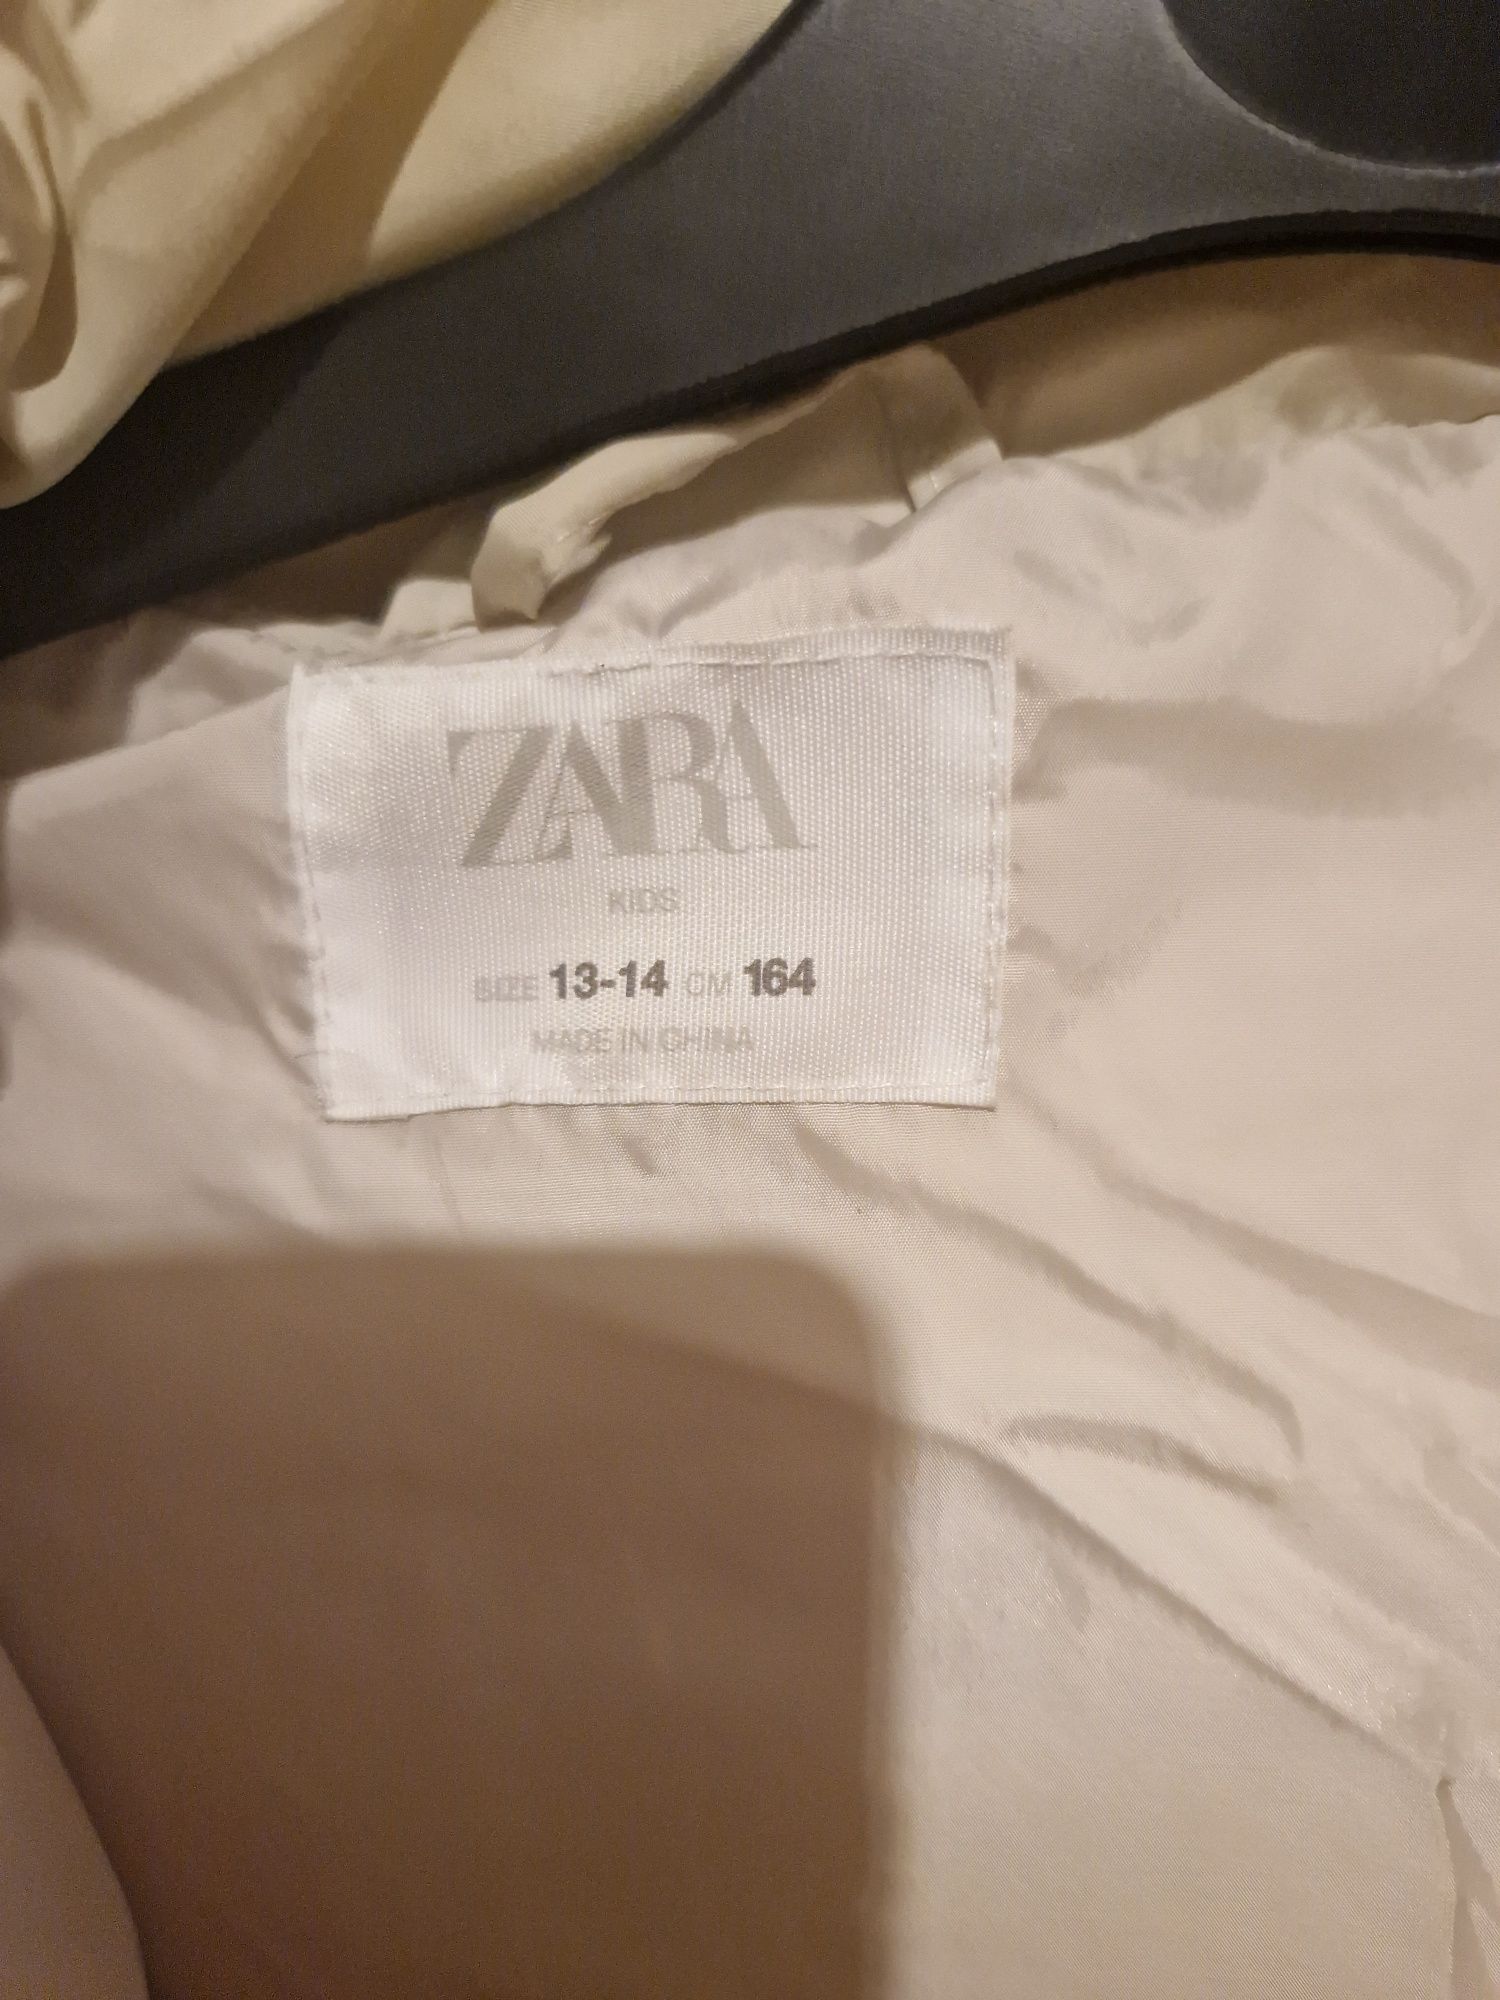 Geaca iarna Zara 13-14 ani, 164 cm